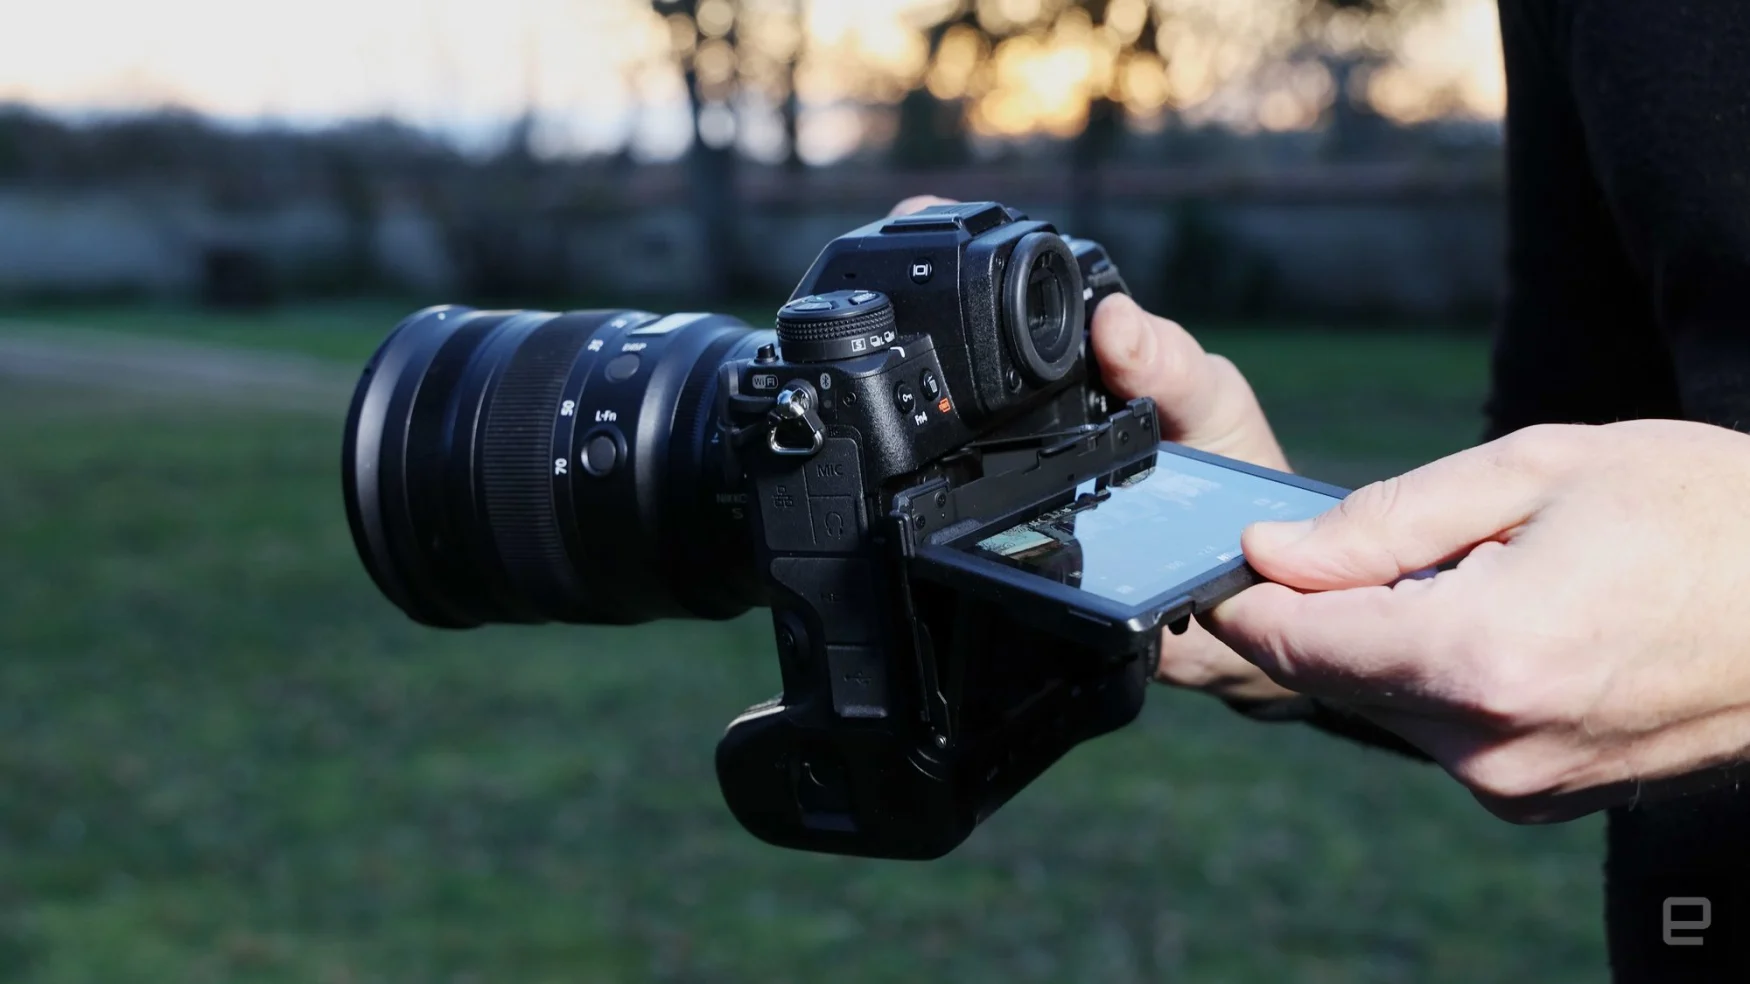 Nikon Z9 mirrorless camera review